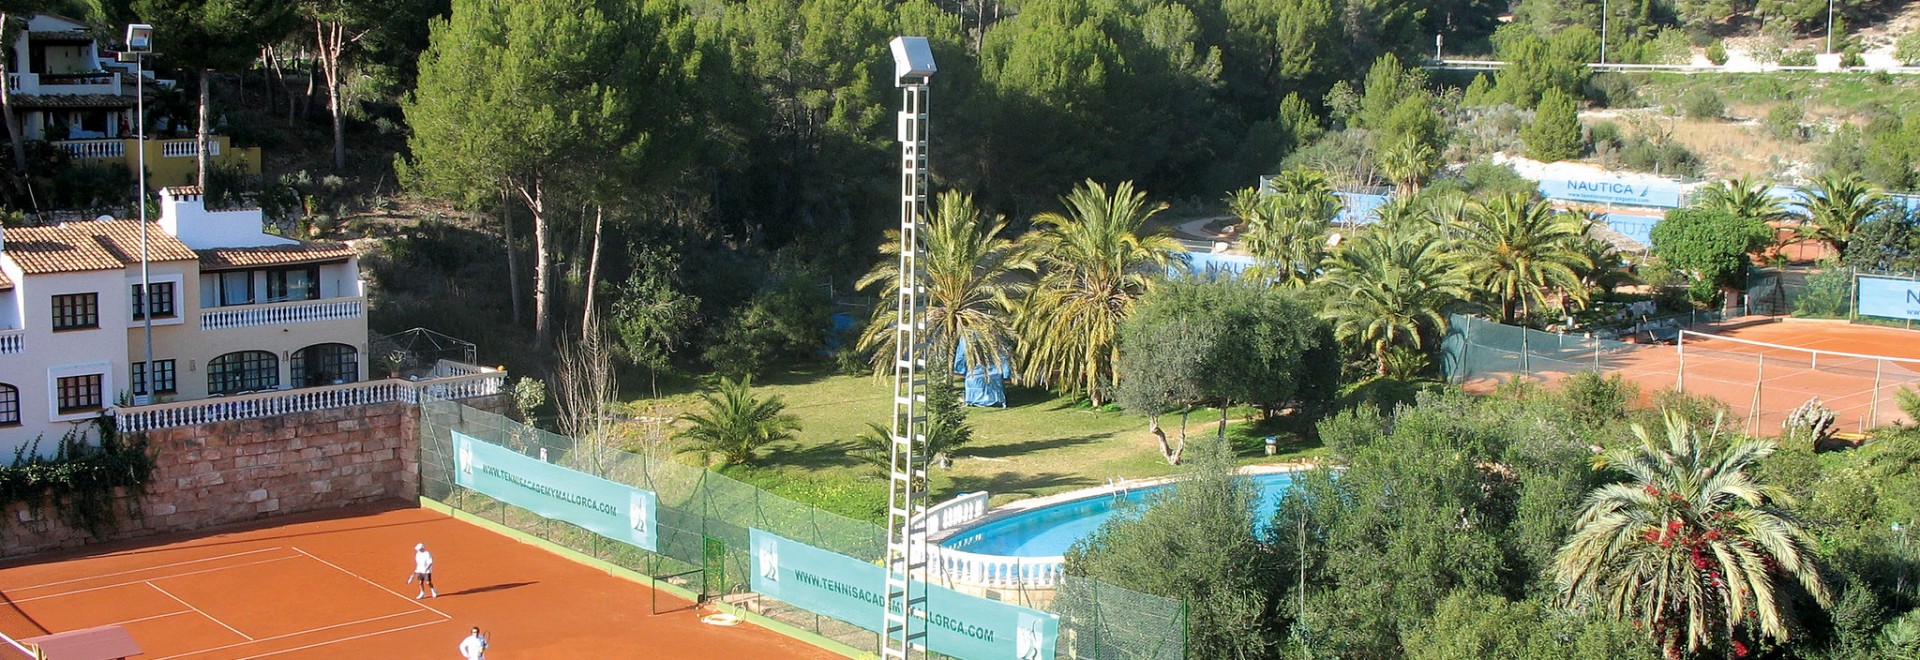 Weekly Adult Tennis Camps - Tennis Academy Mallorca, Paguera